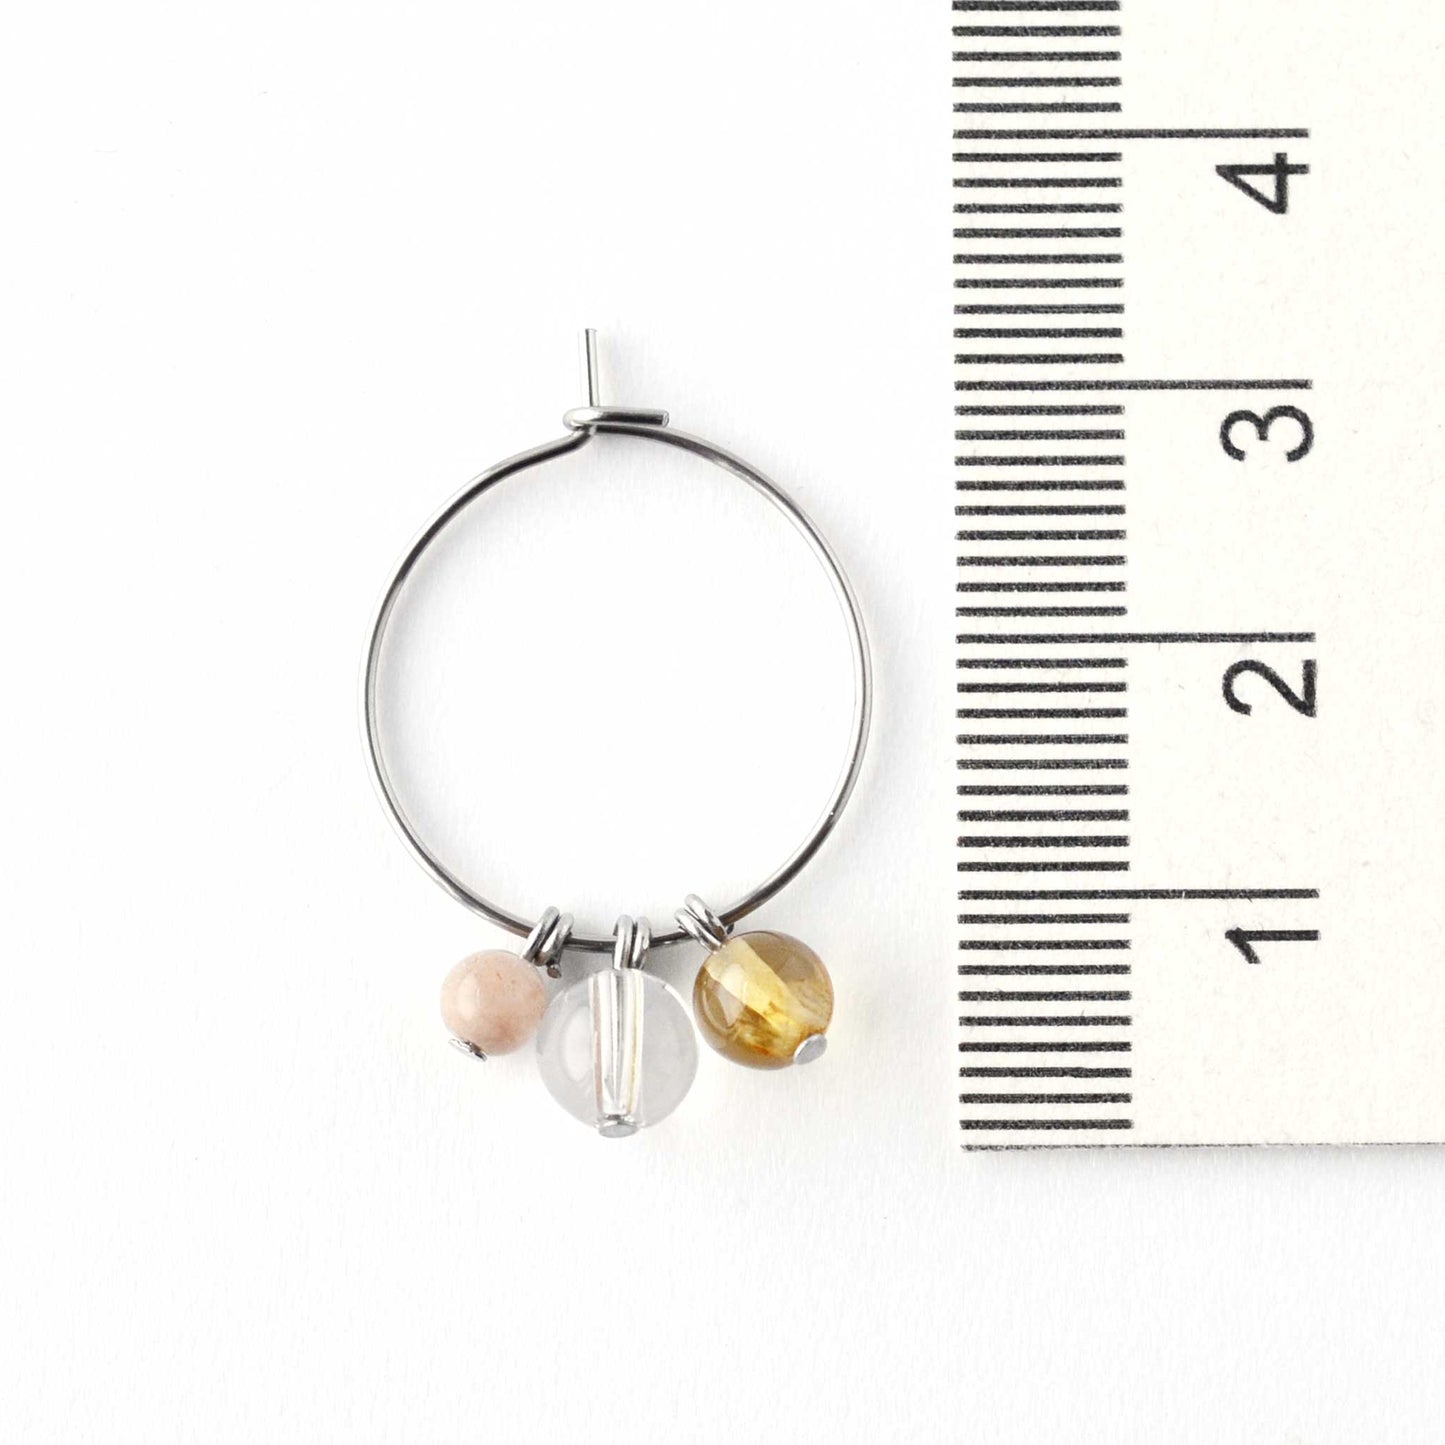 2cm diameter hoop earring with yellow gemstone beads next to ruler